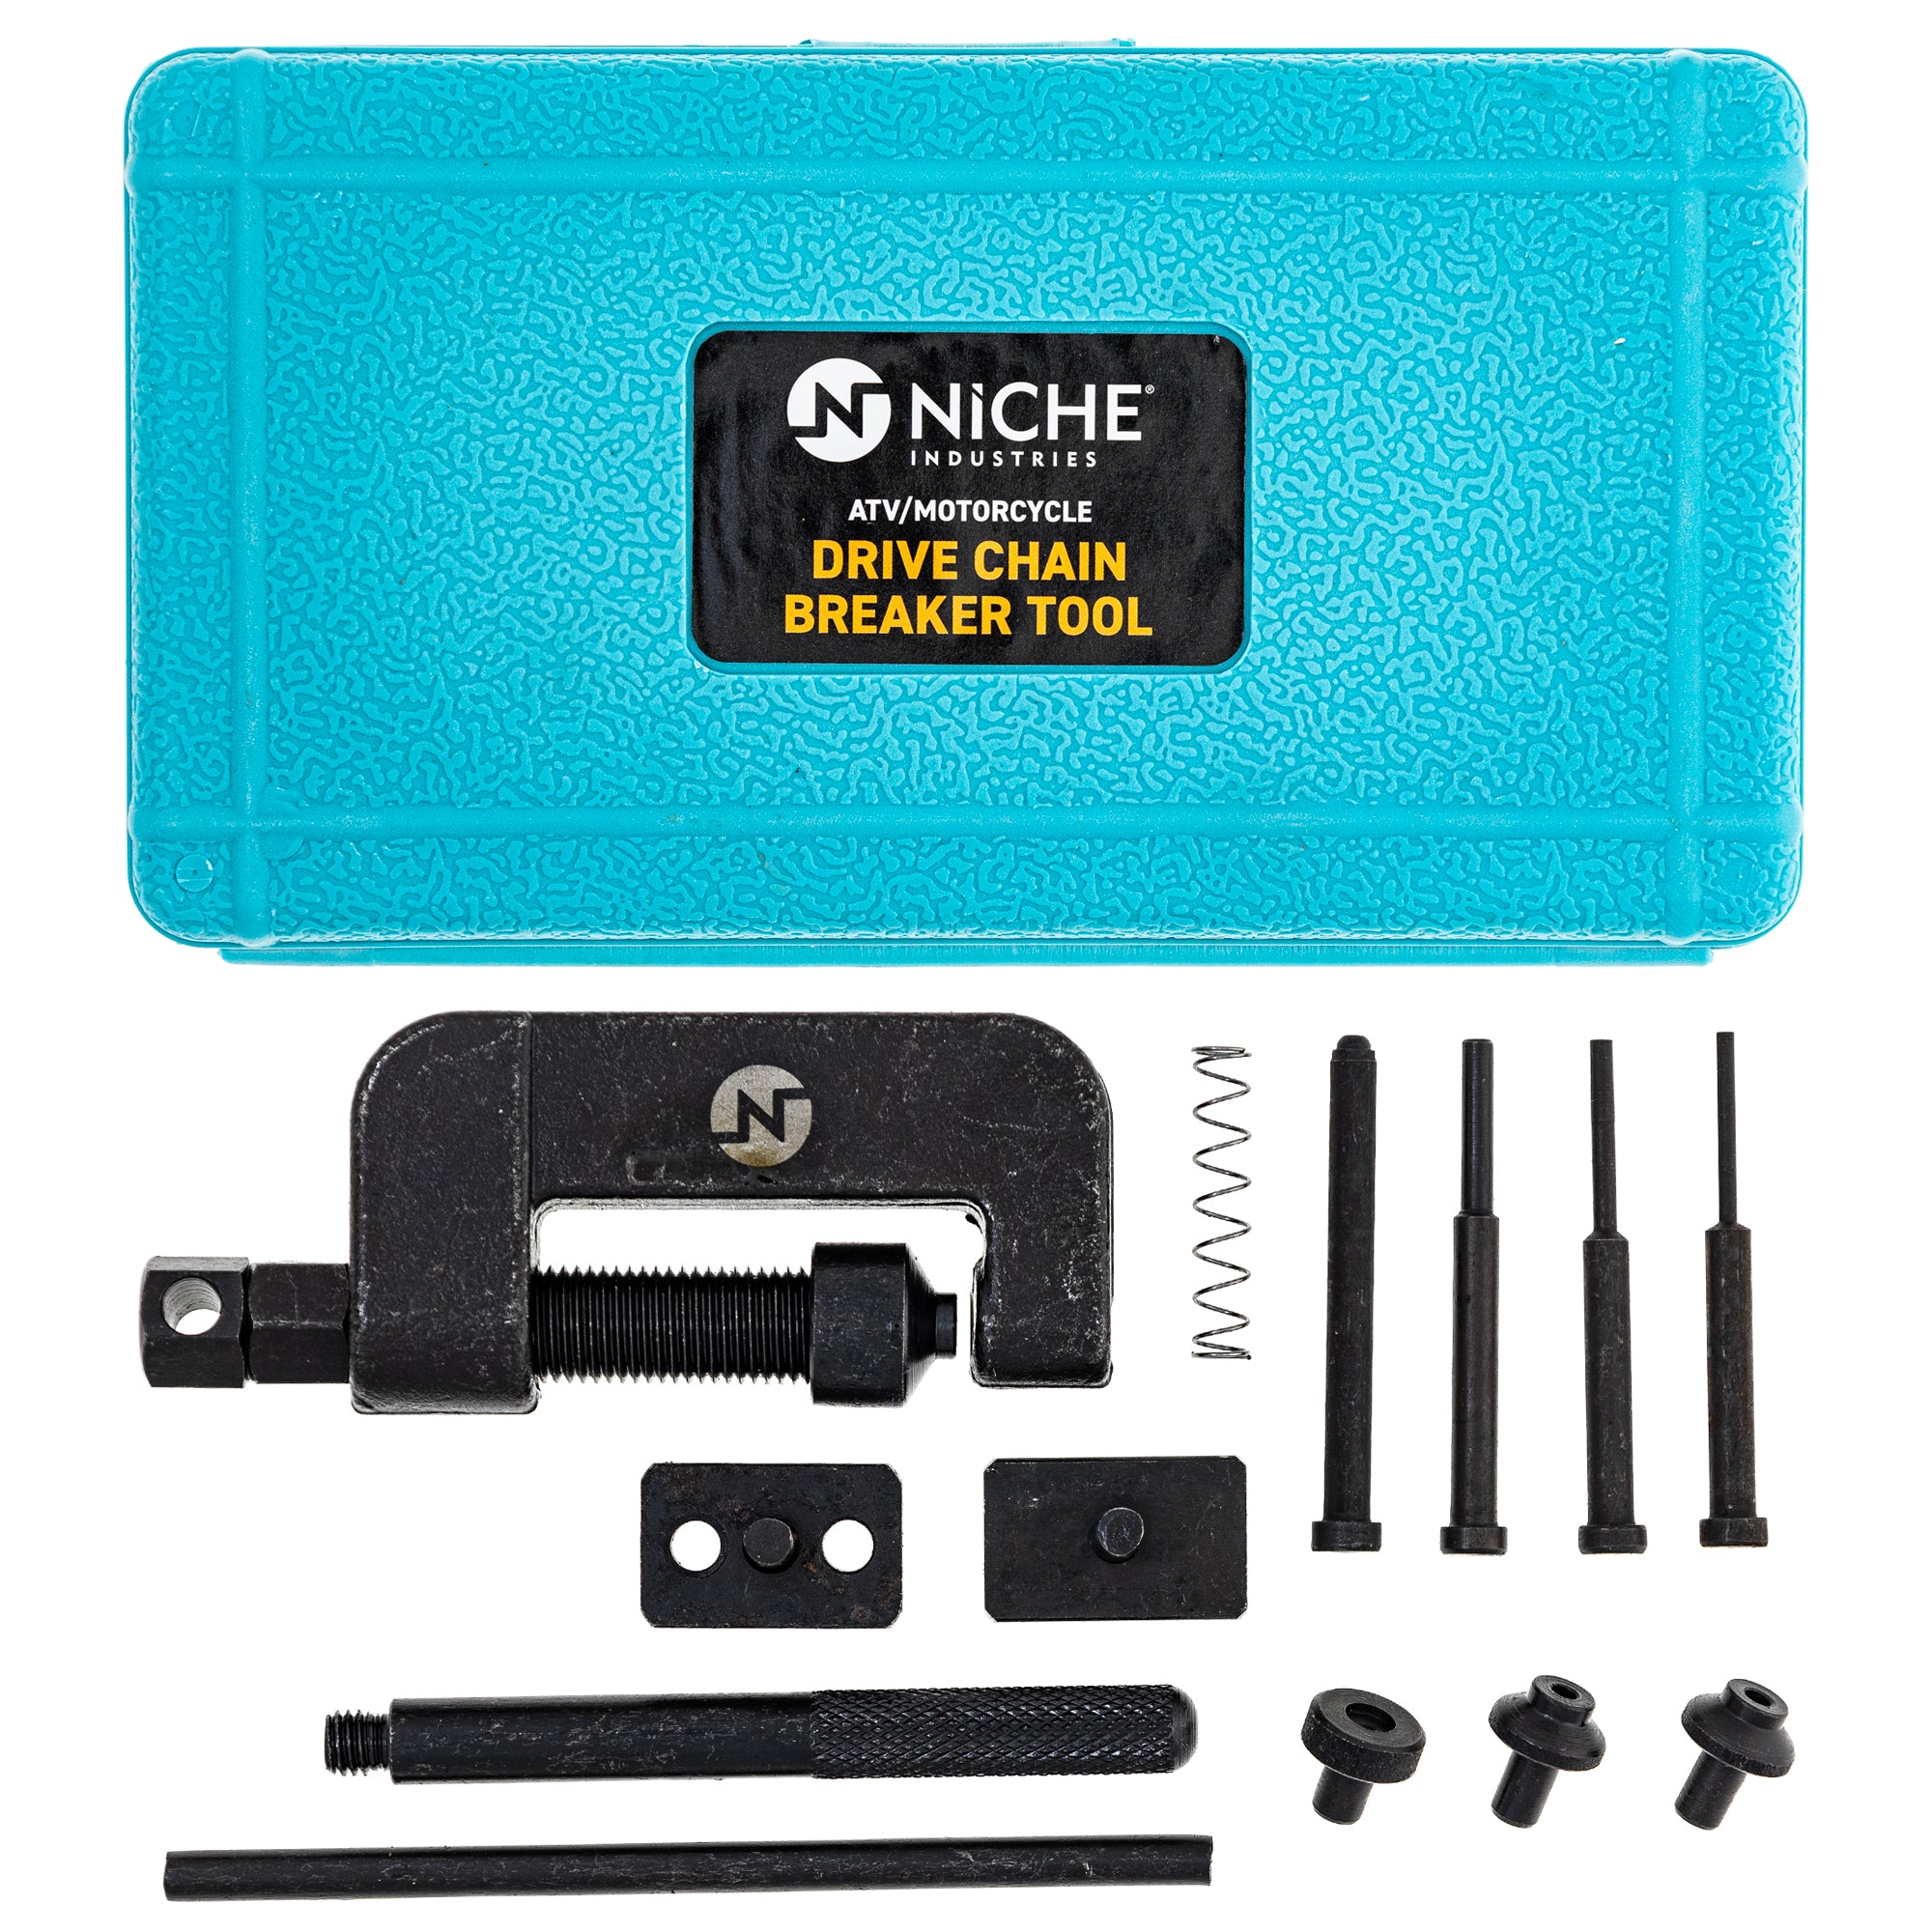 NICHE Drive Chain Breaker Tool